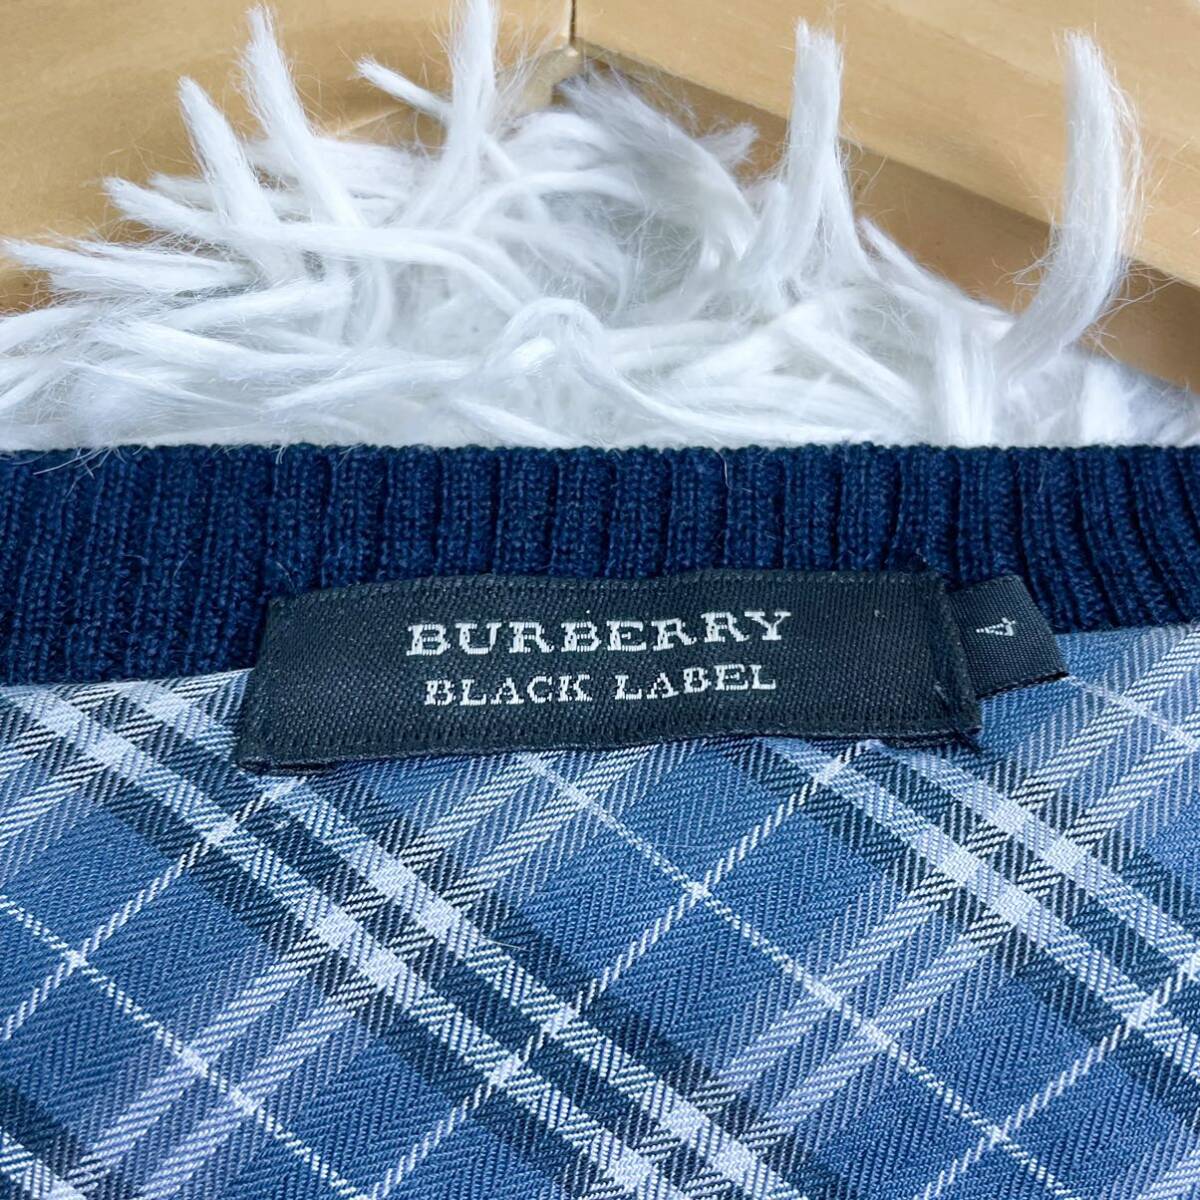 [E11]BURBERRY BLACK LABEL Burberry Black Label кардиган длинный рукав вязаный шланг Logo noba проверка темно-синий темно-синий 4 XL размер 